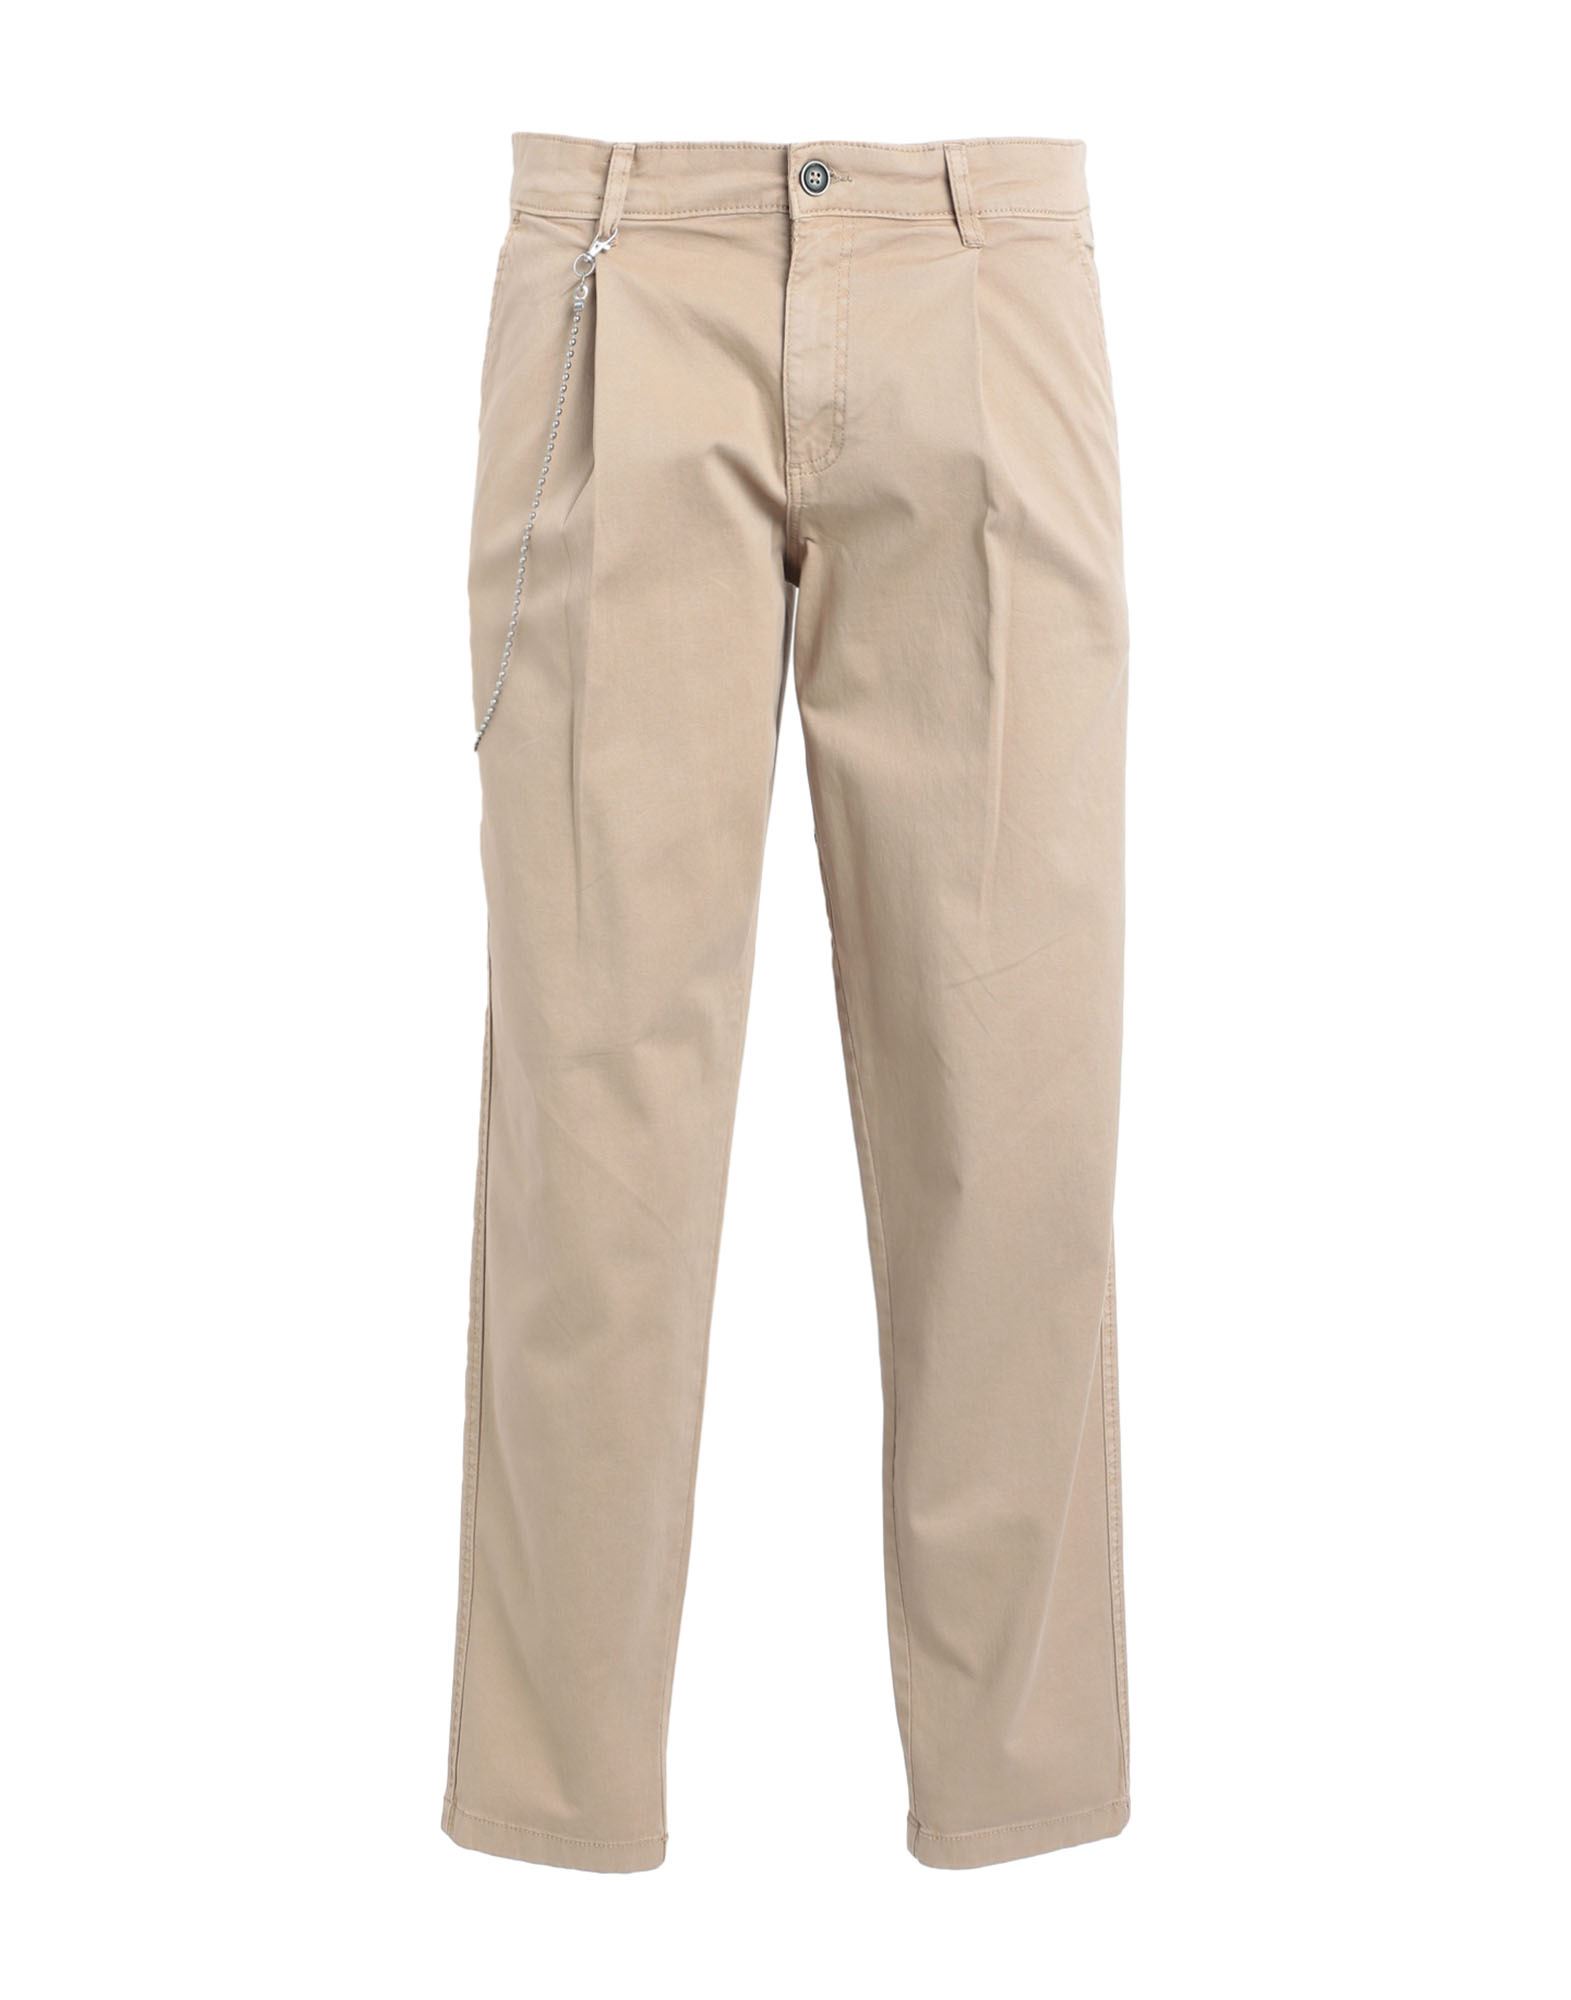 Jack & Jones Man Pants Beige Size 34w-32l Cotton, Elastane